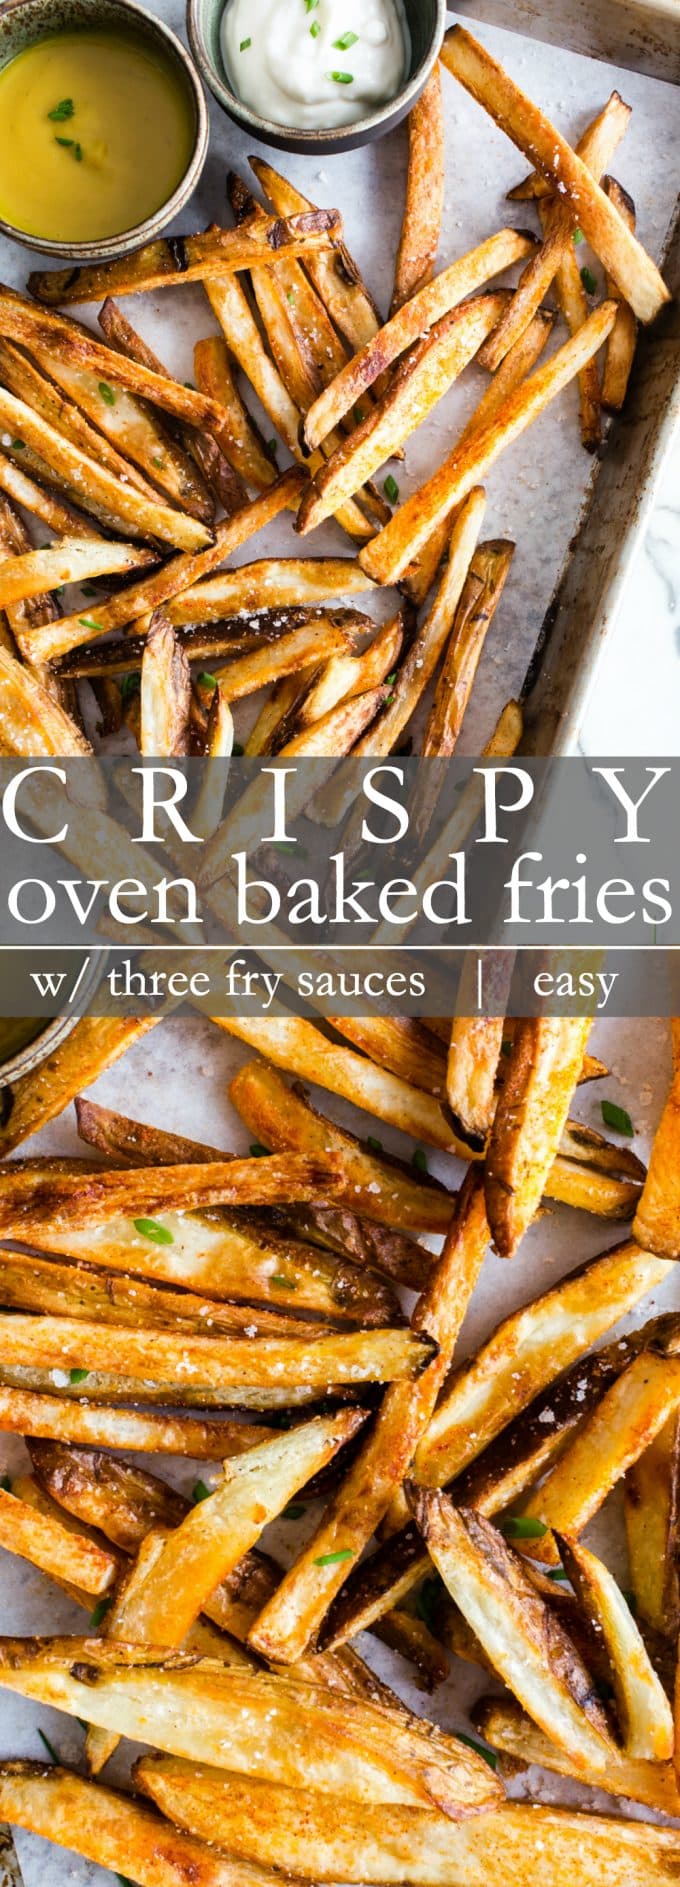 Crispy Oven Fries